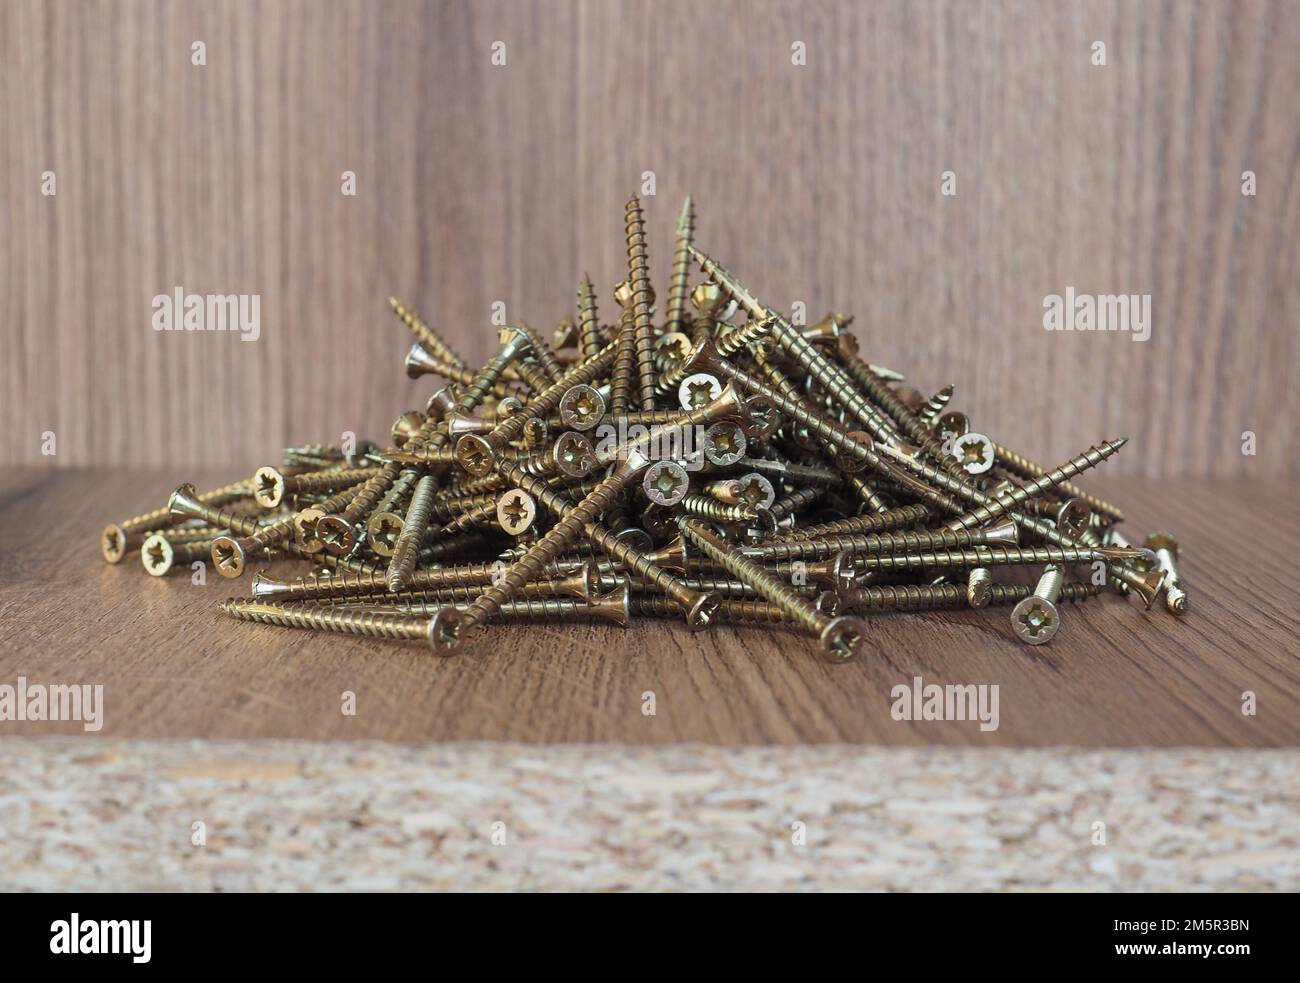 wood screws on melamine manufactured wood panel Stock Photo - Alamy